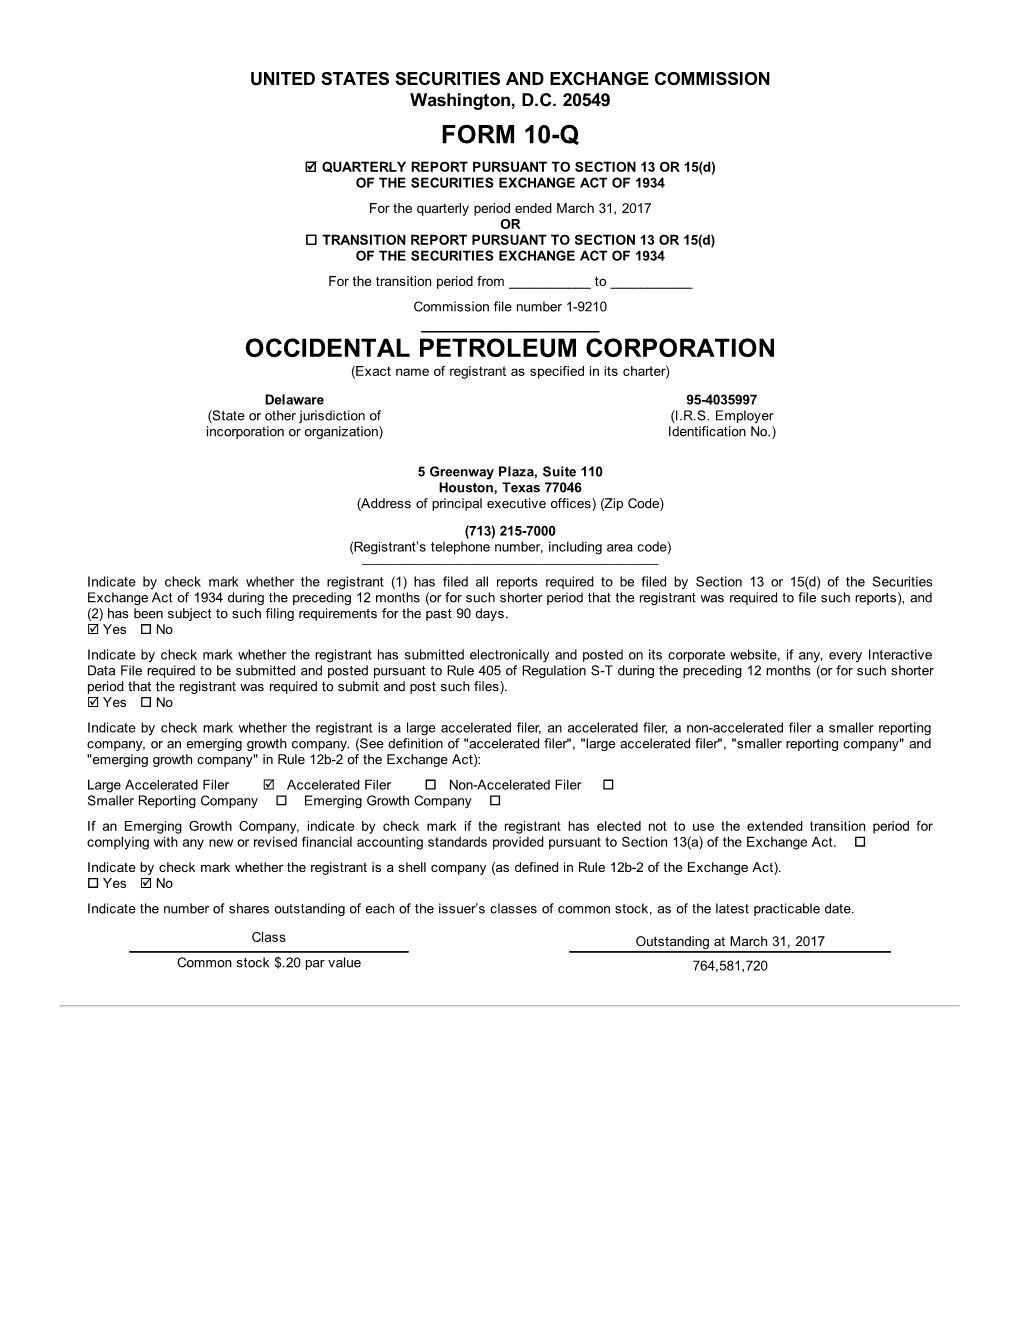 Form 10-Q Occidental Petroleum Corporation